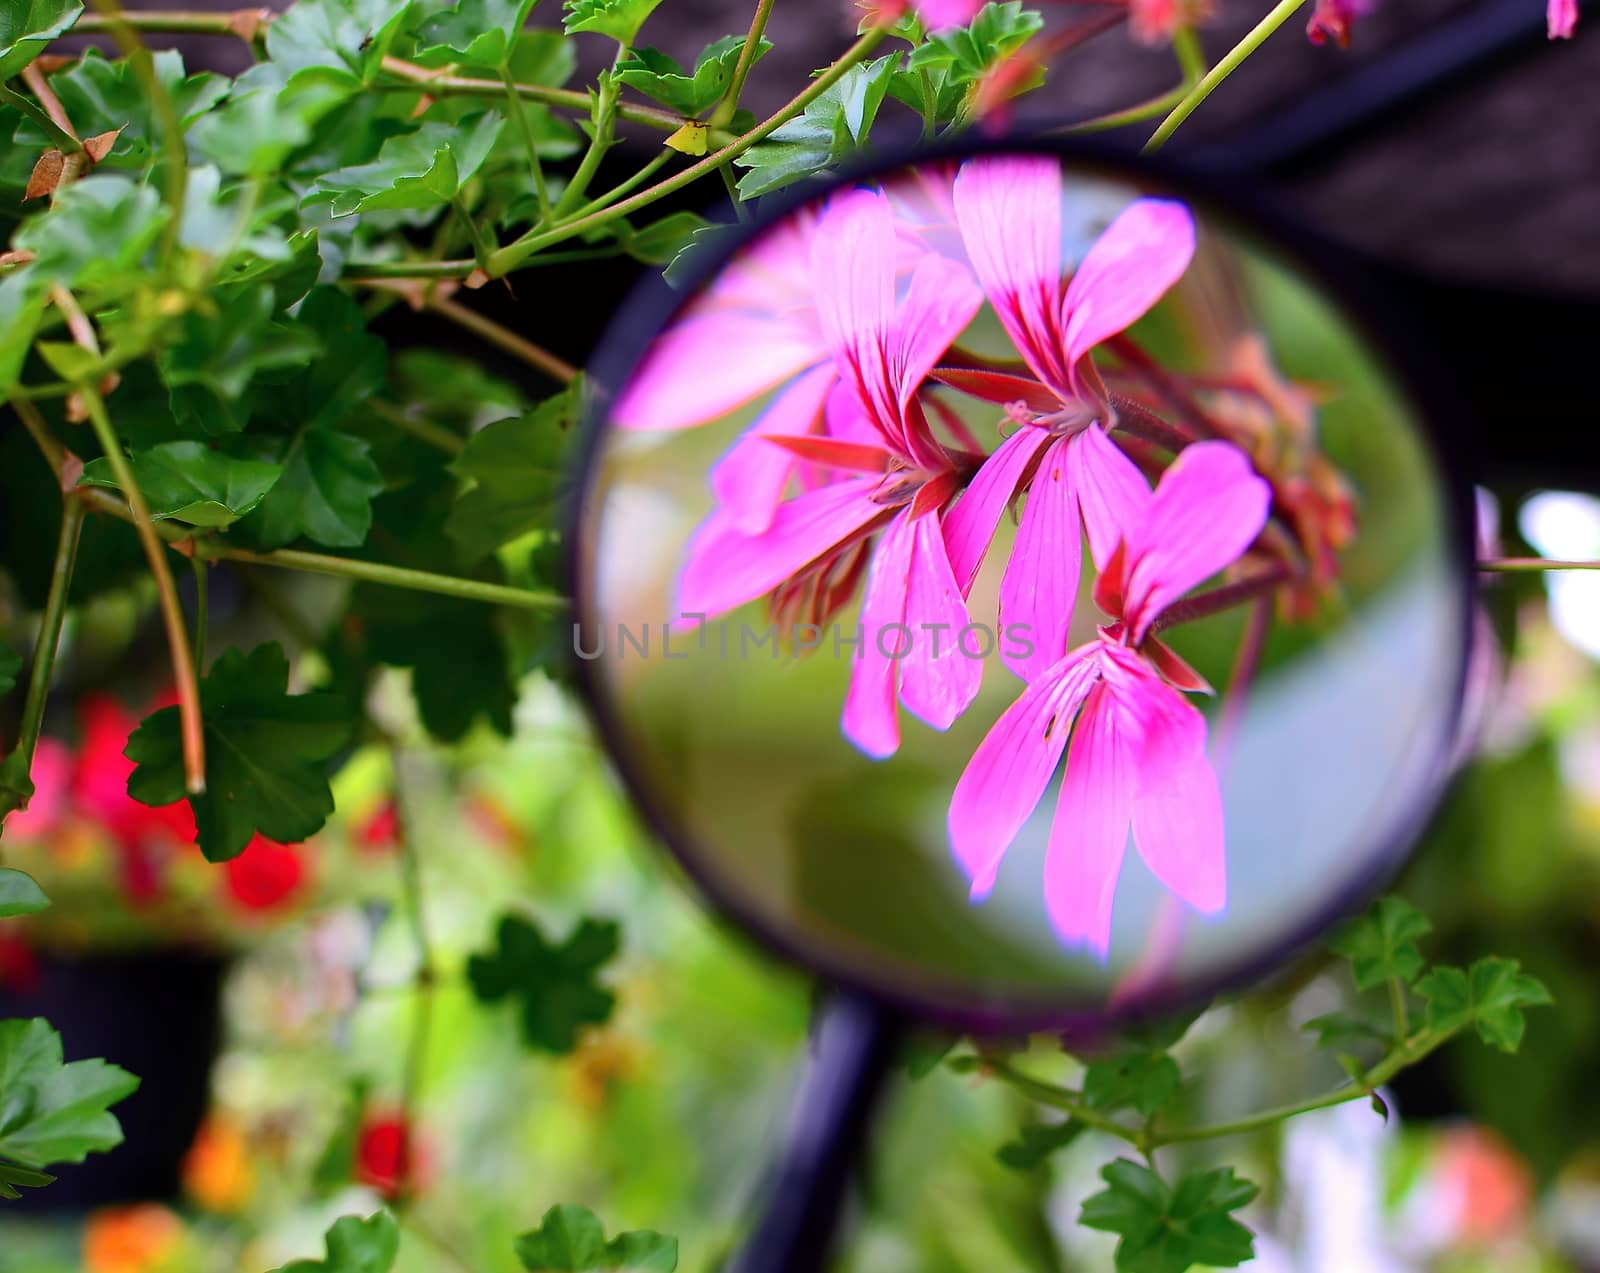 Pelargonium under magnifying glass. by hamik